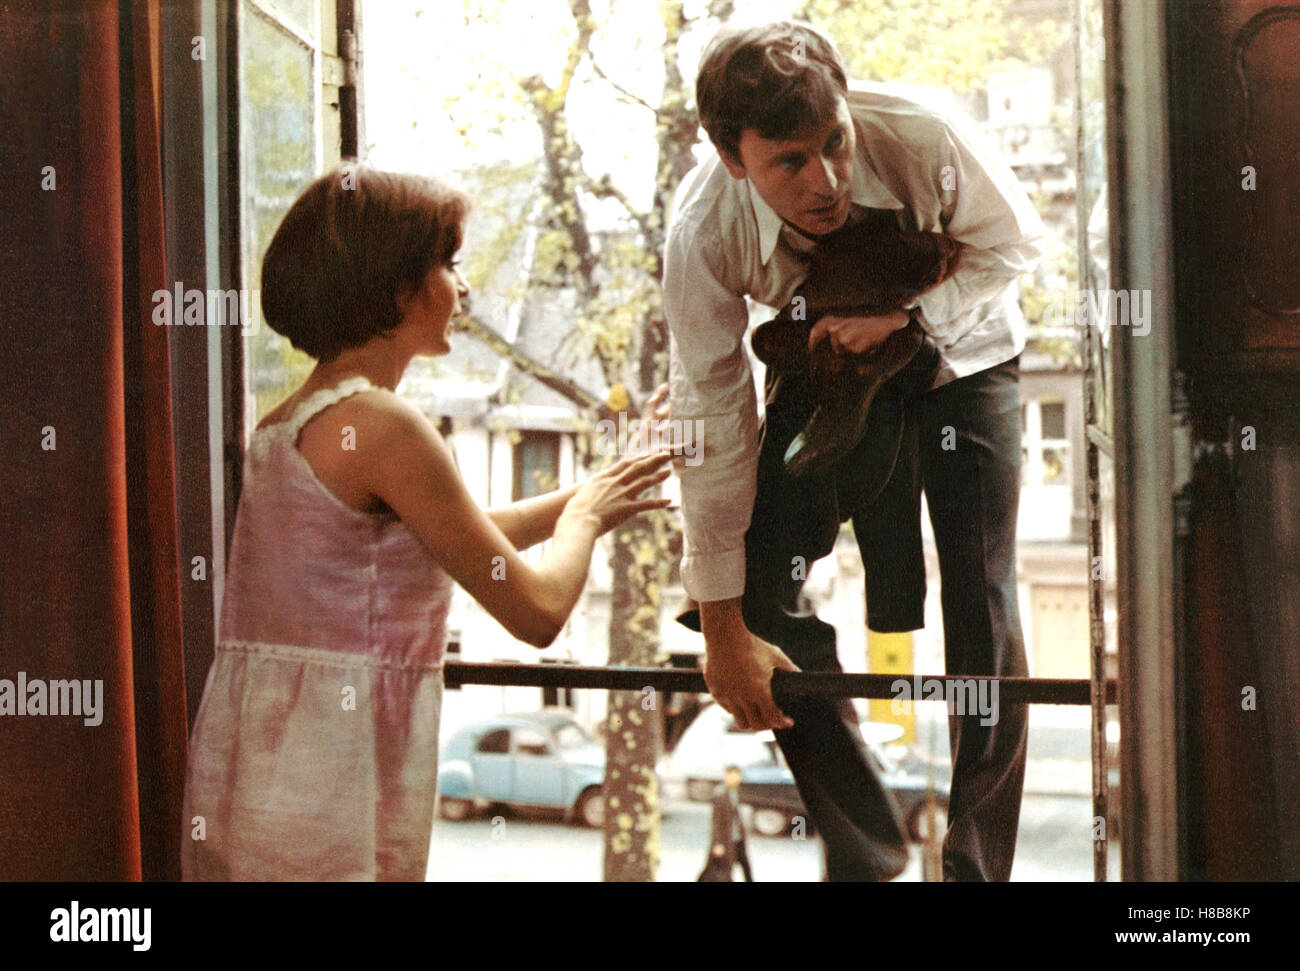 Der Amerikaner, (L'AMERICAIN) F 1969, Regie: Marcel Bozzuffi, TANYA LOPERT,  JEAN-LOUIS TRINTIGNANT,  Key: Fenster, Einsteigen Stock Photo